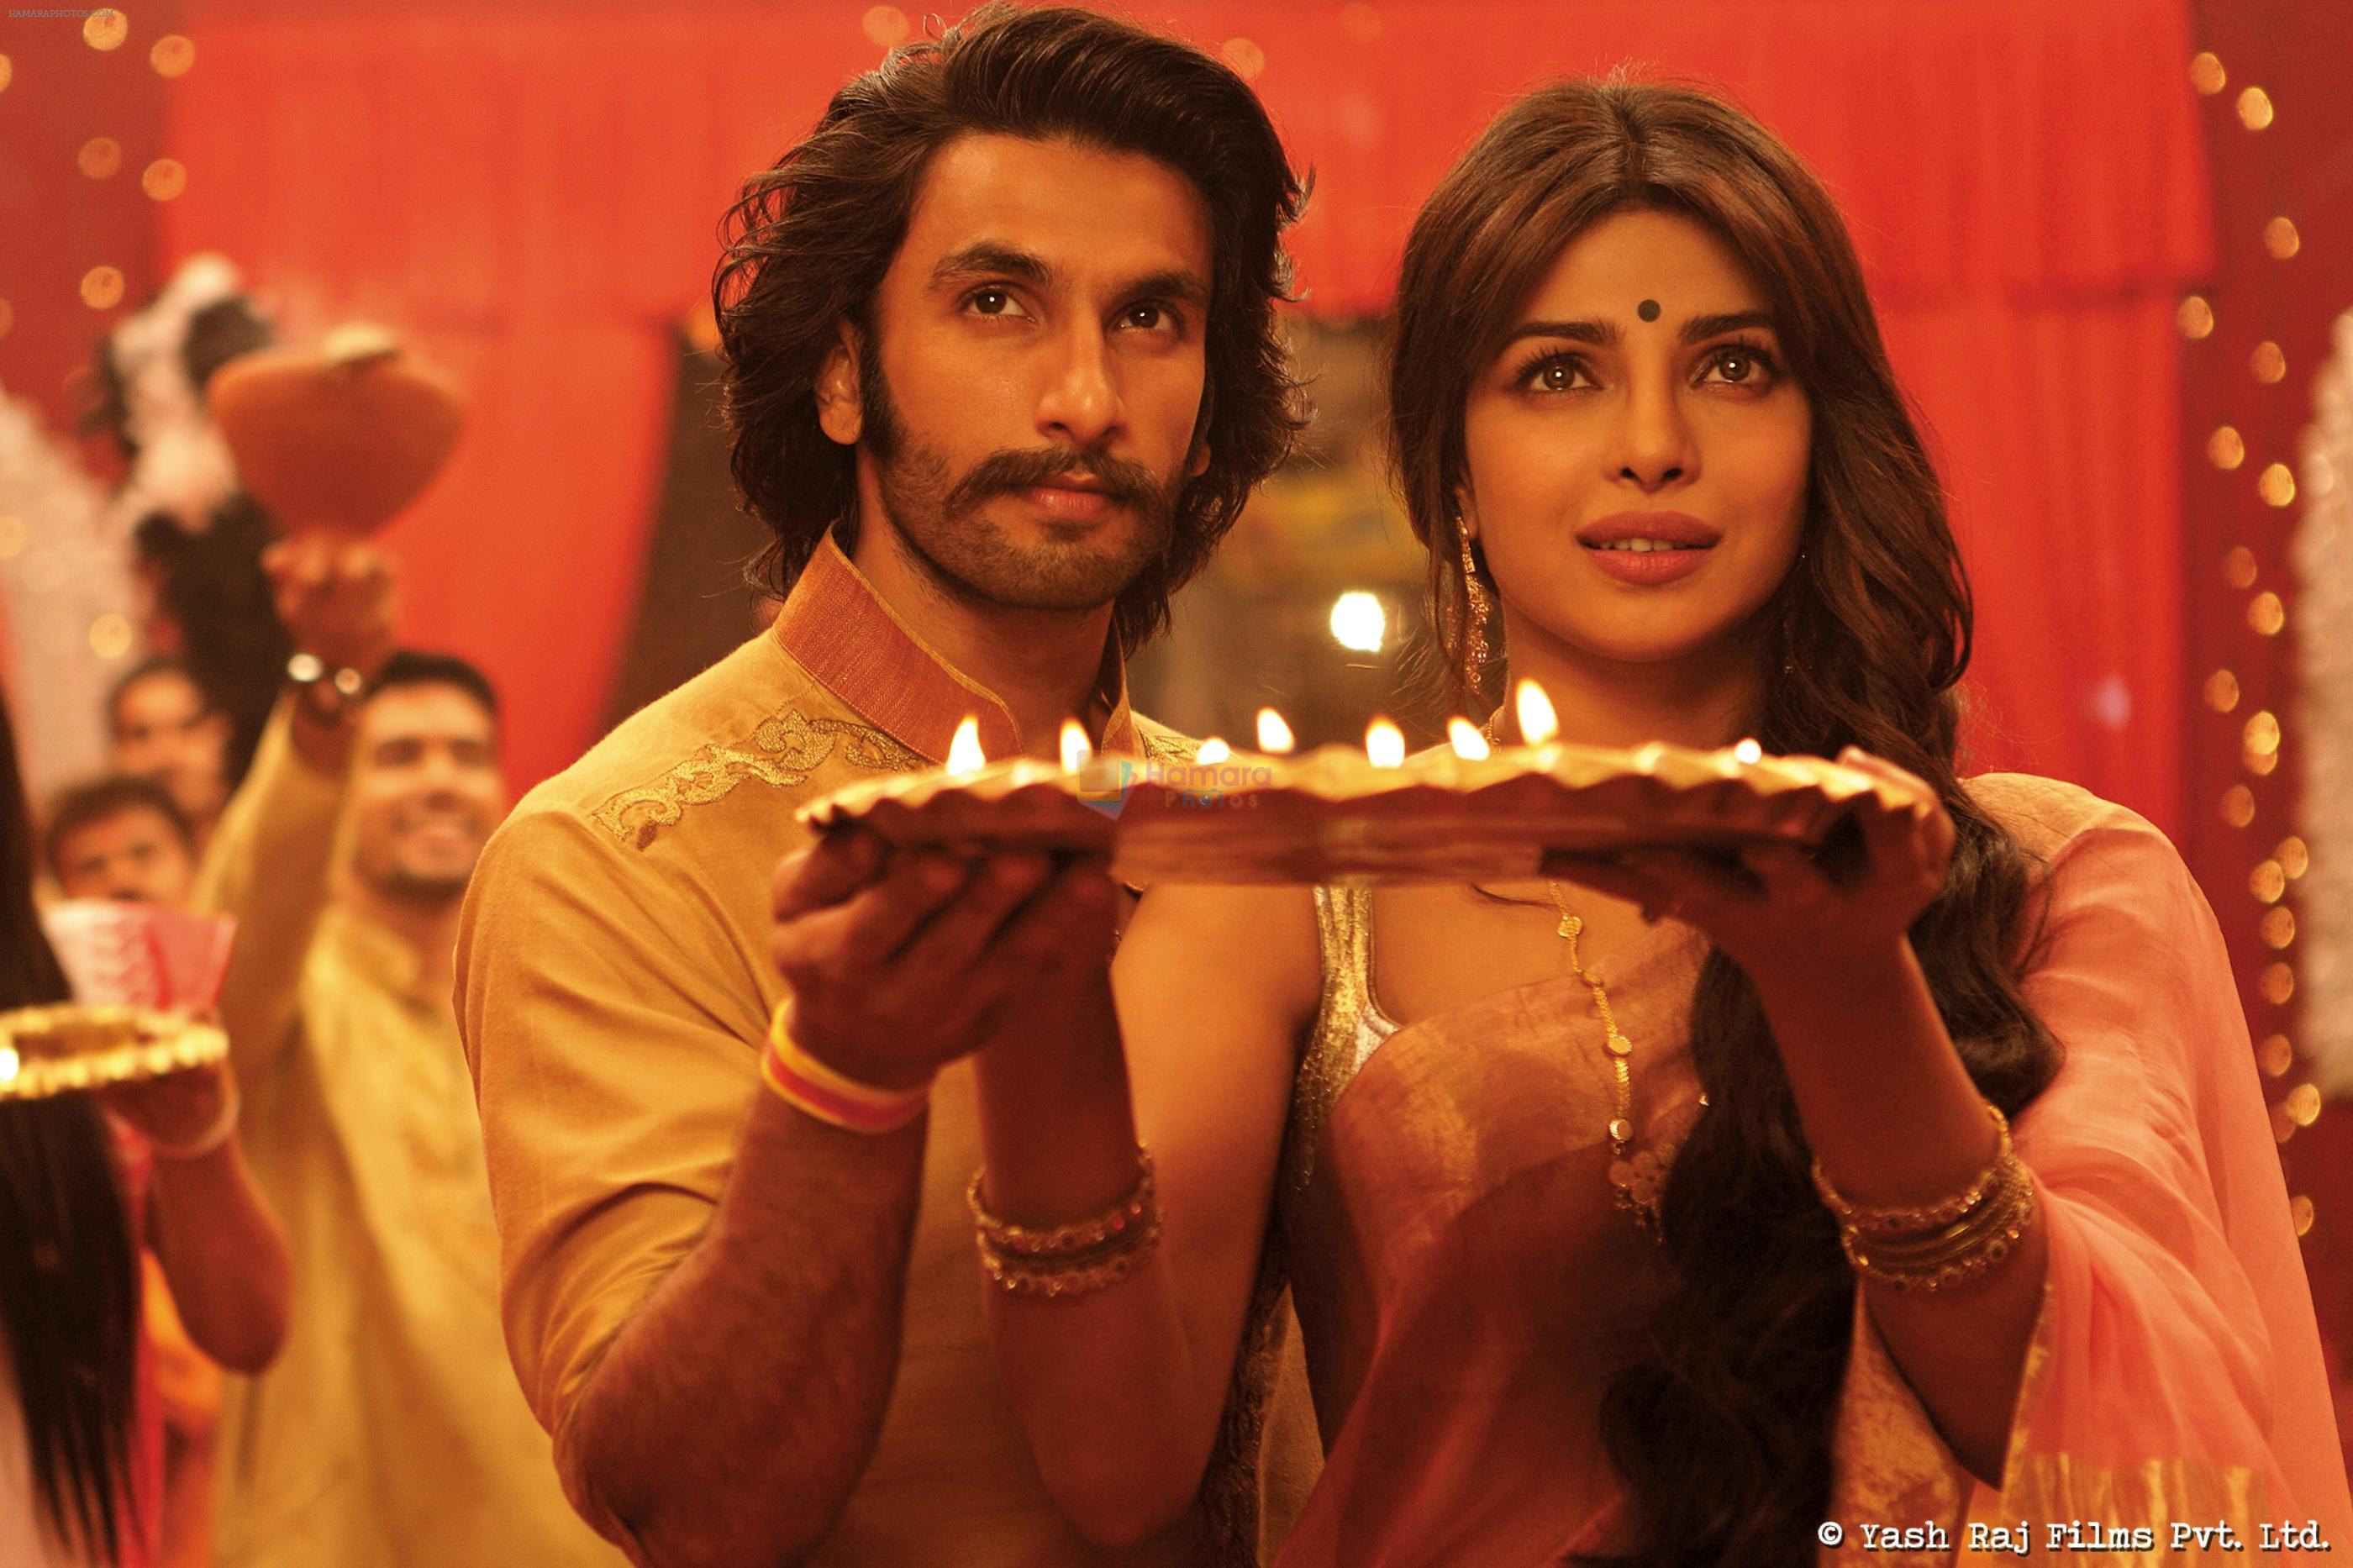 Hindcha kinolar. Вне закона / Gunday / 2014. Ранвир Сингкх. Хинд фильмлари.